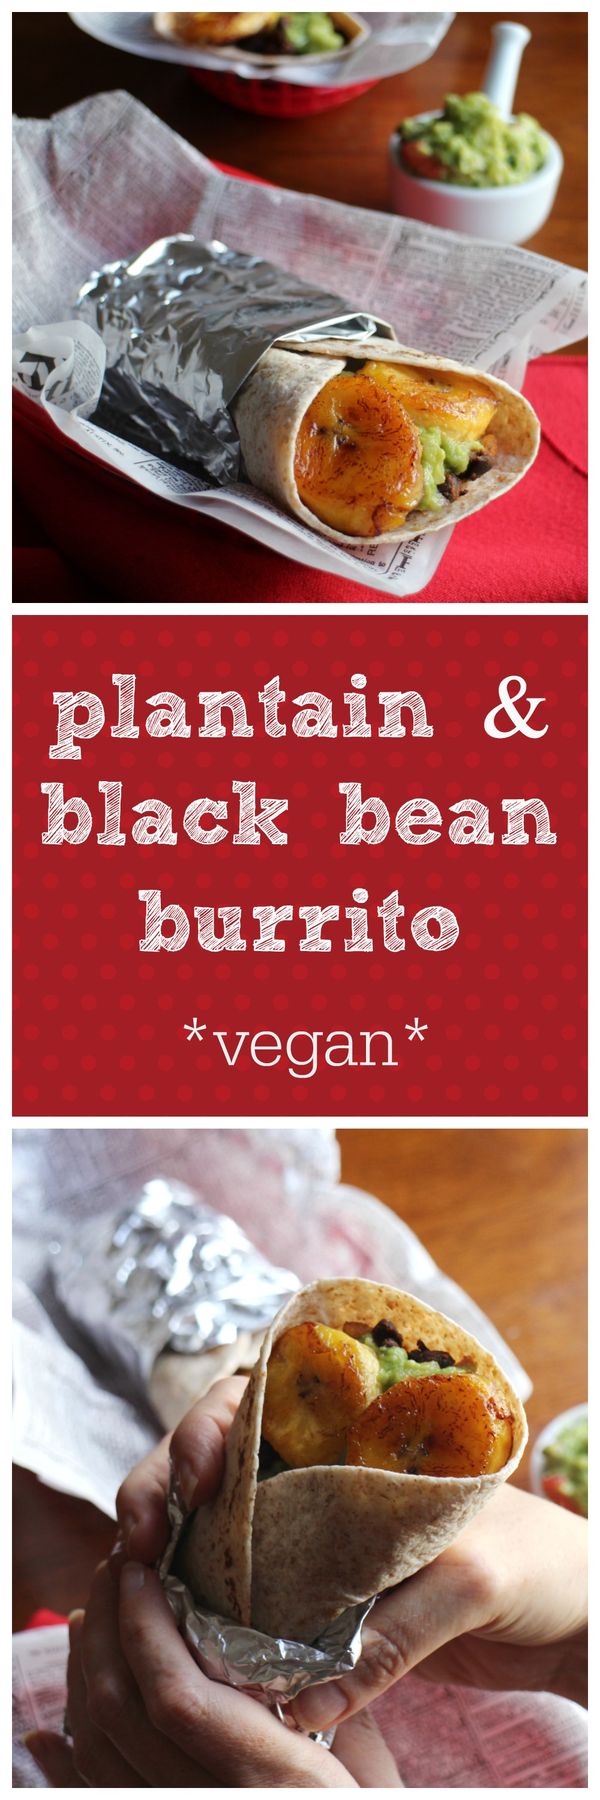 Plantain & black bean burritos